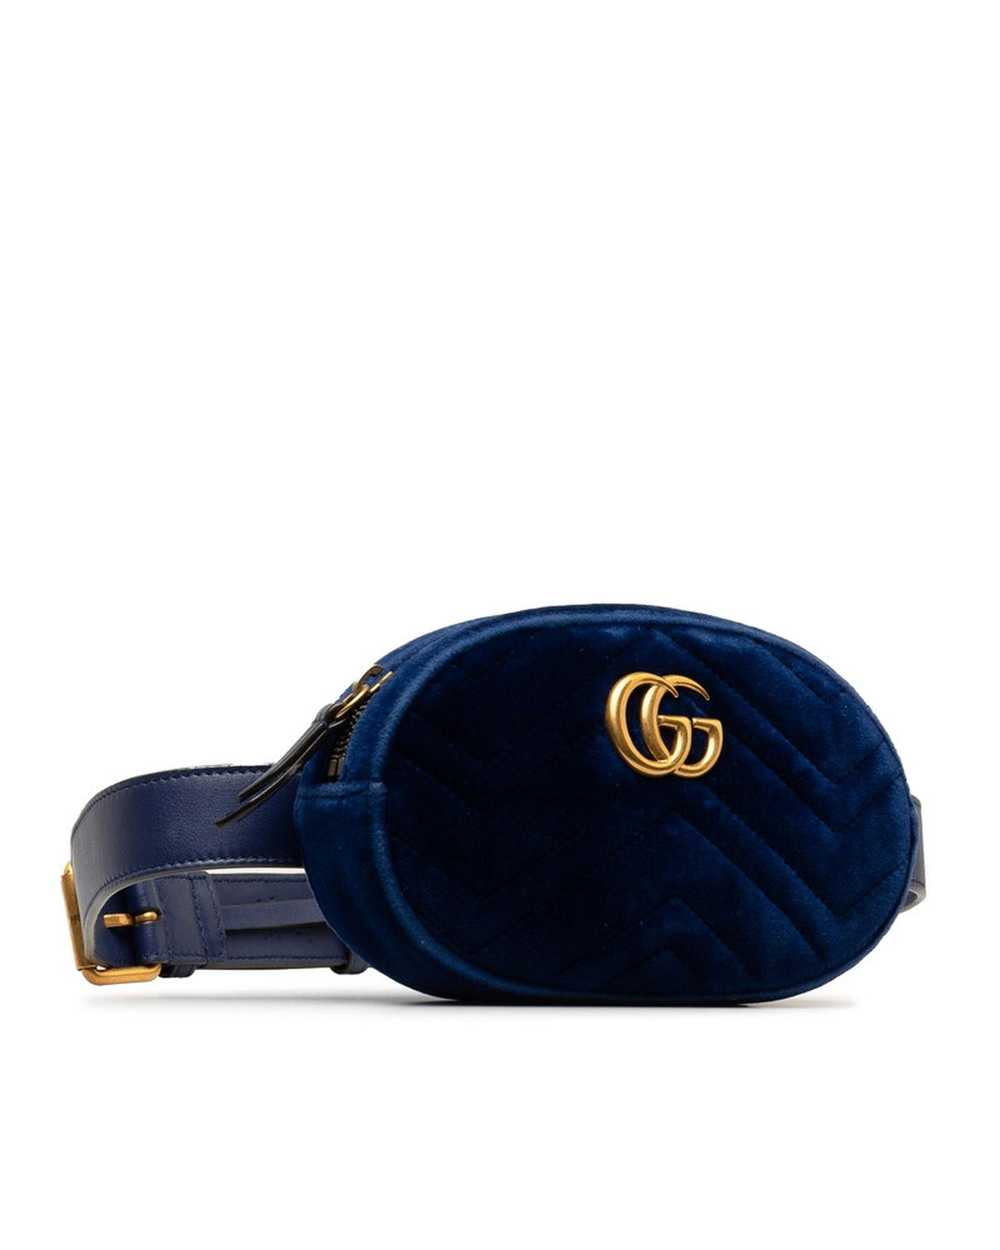 Gucci Blue Velour Belt Bag - GG Marmont - image 2